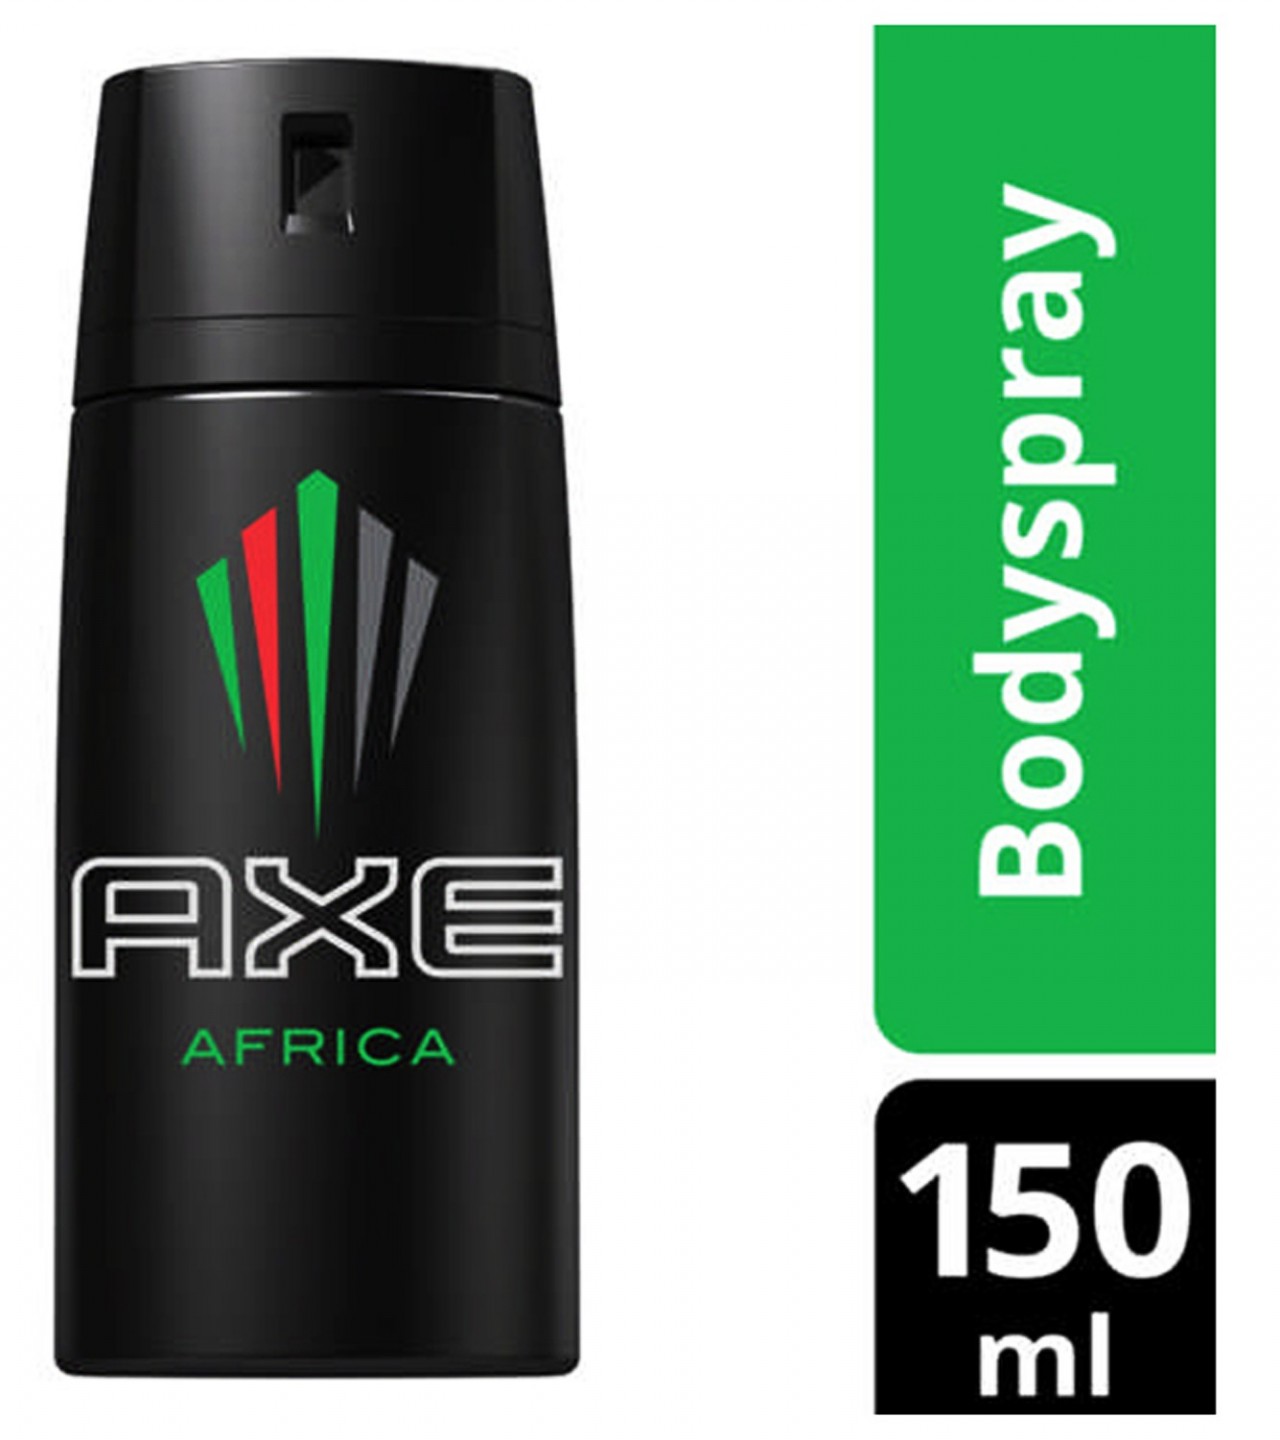 Axe Africa Body Spray Deodorant For Men – 150 ml